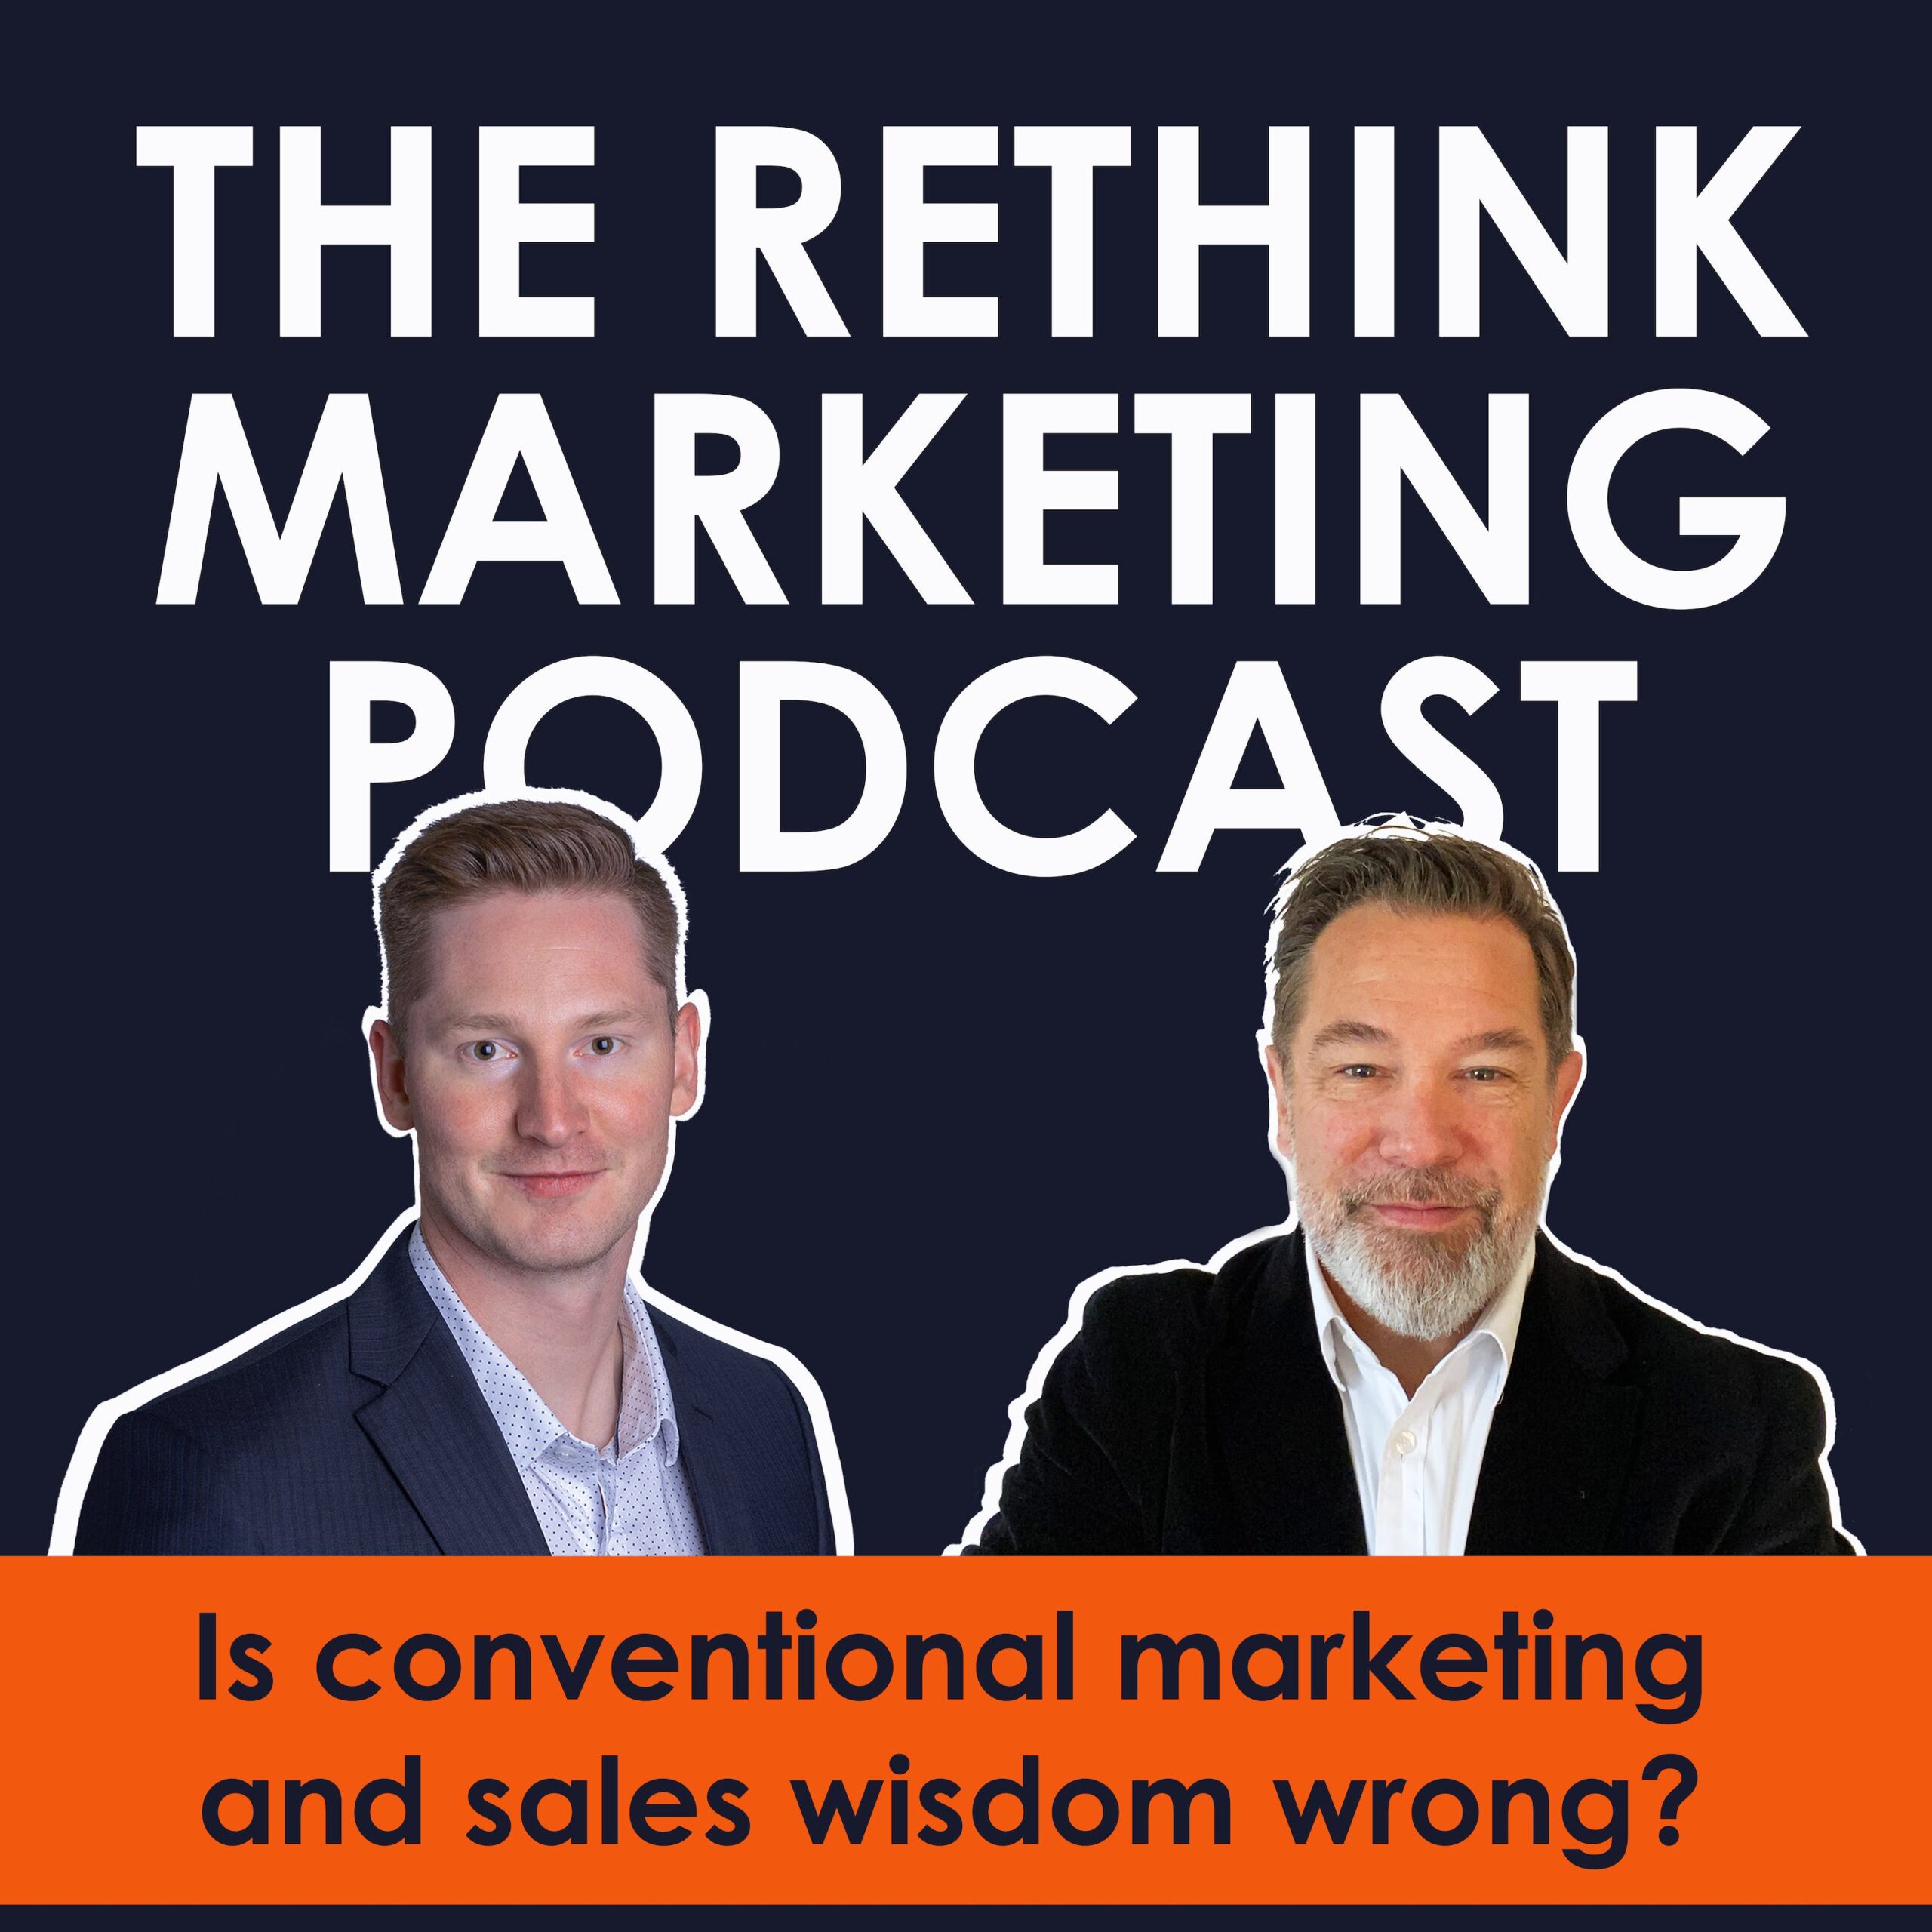 The Rethink Marketing Podcast